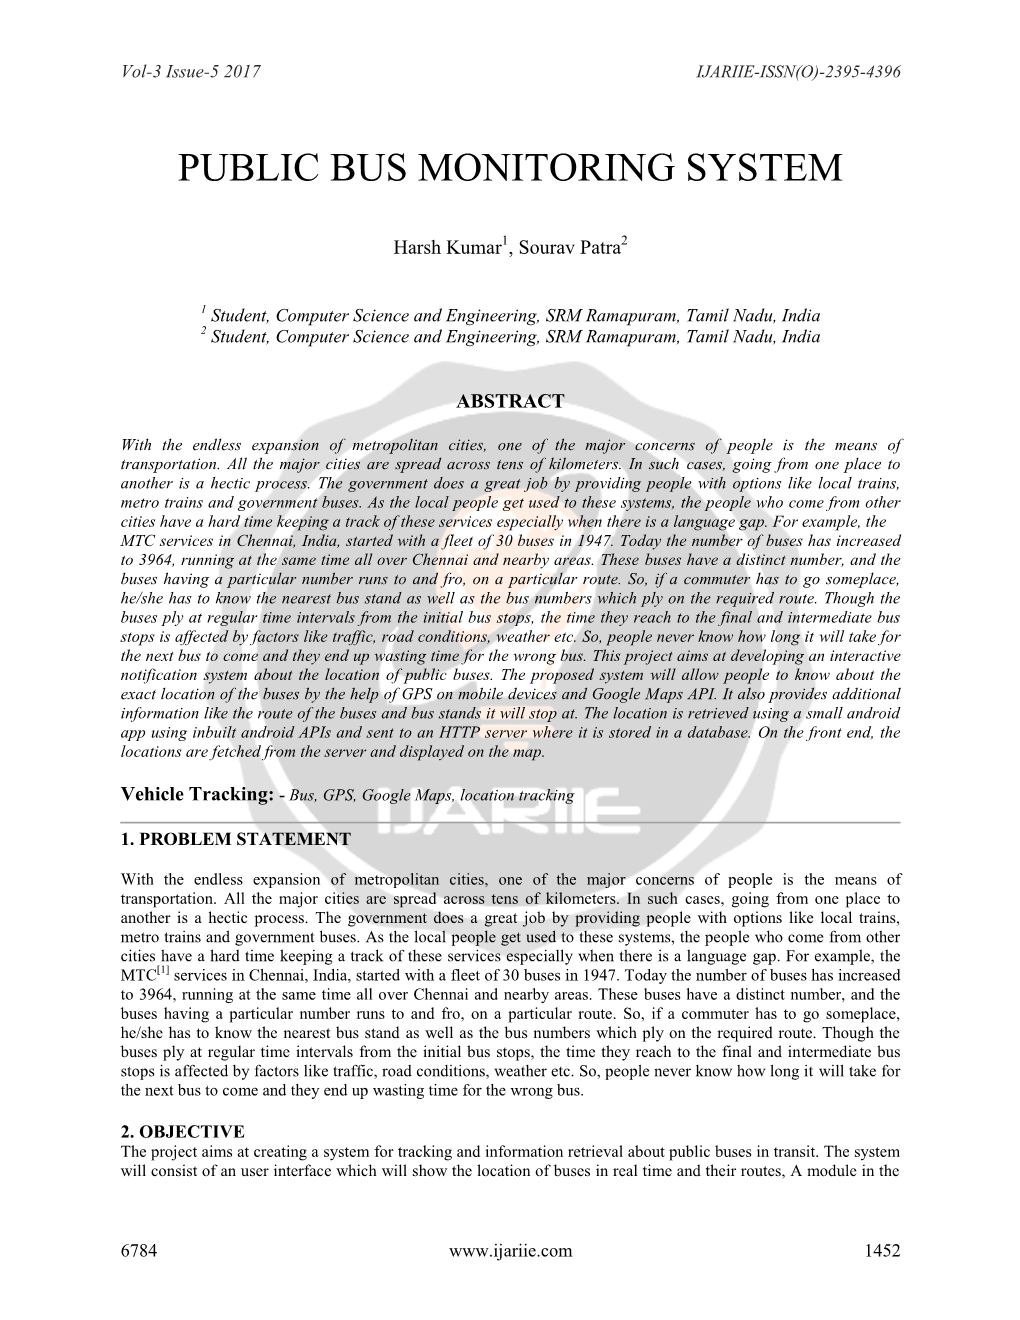 Public Bus Monitoring System